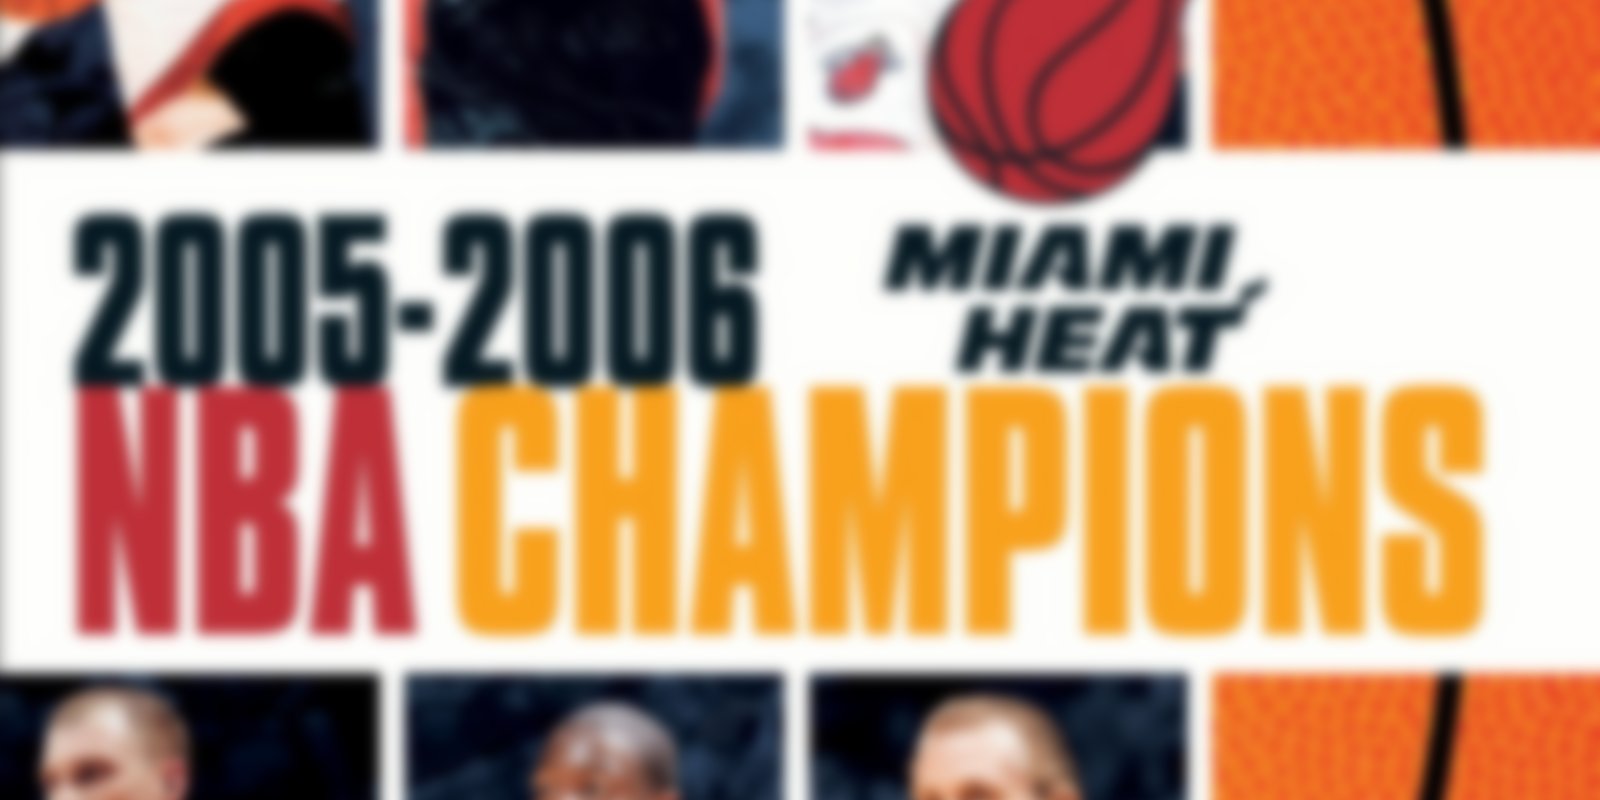 NBA Champions 2005-2006 - Miami Heat